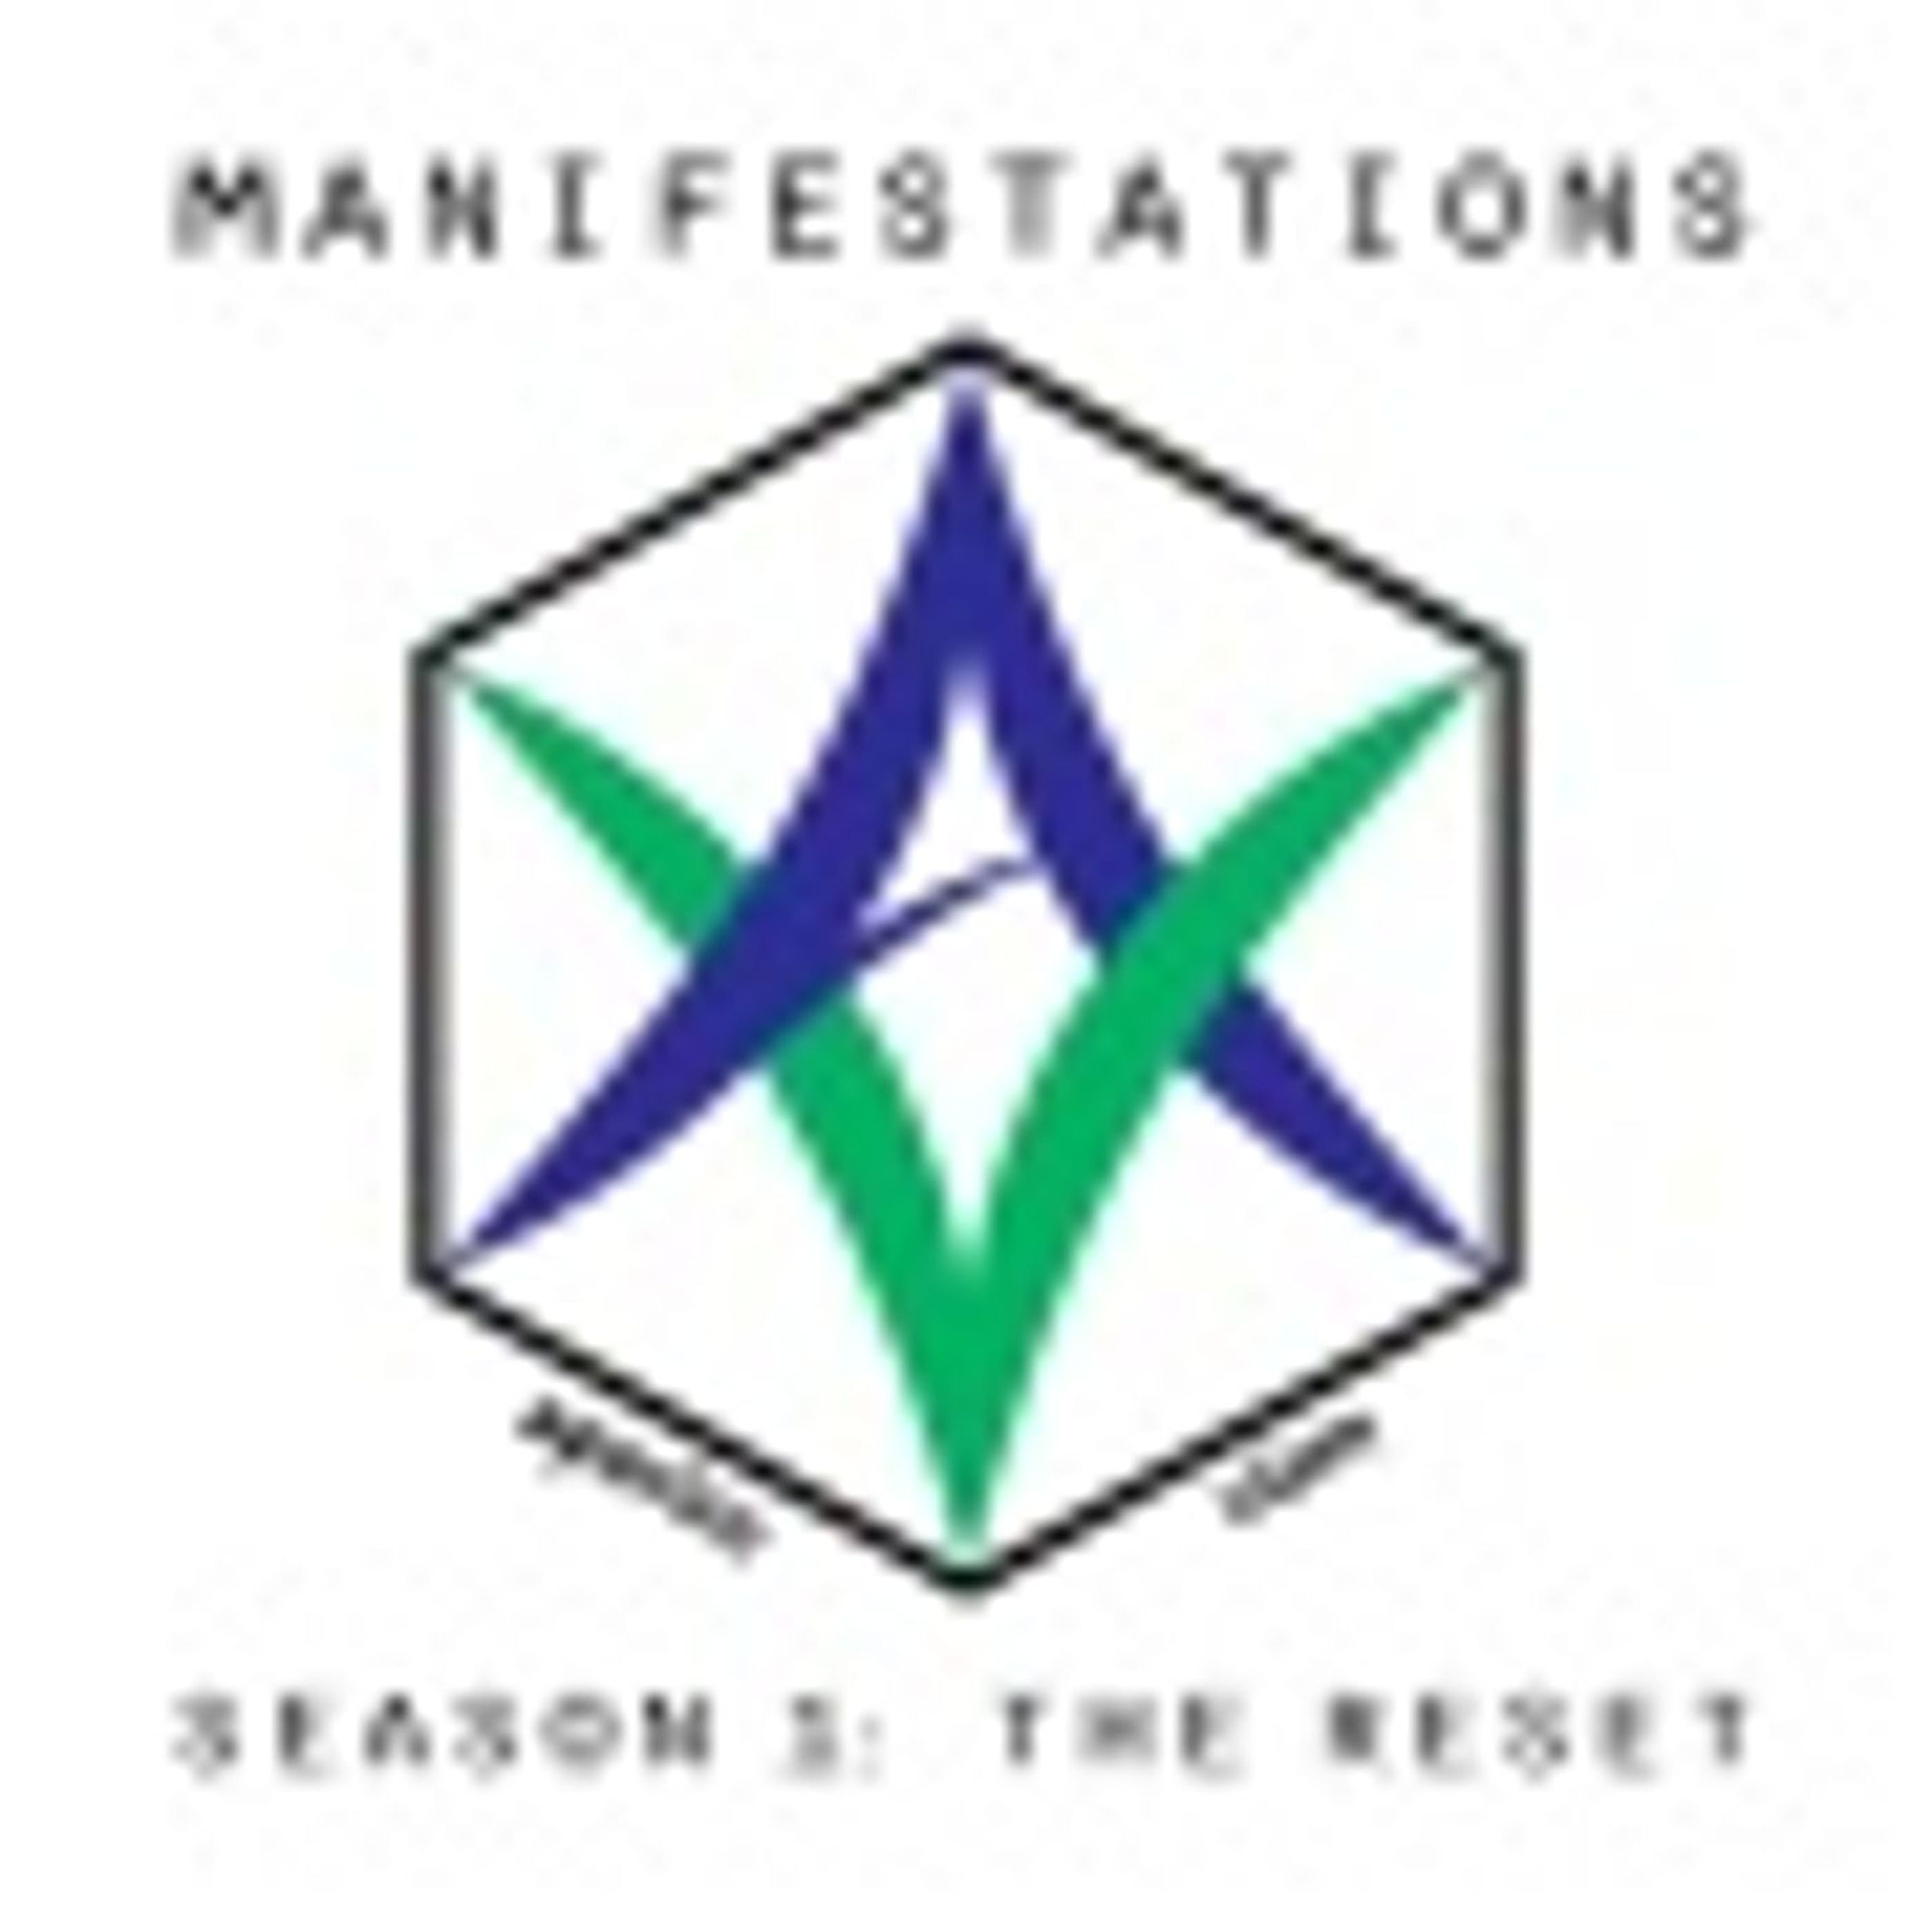 Introducing MANIFESTATIONS Trailer #2